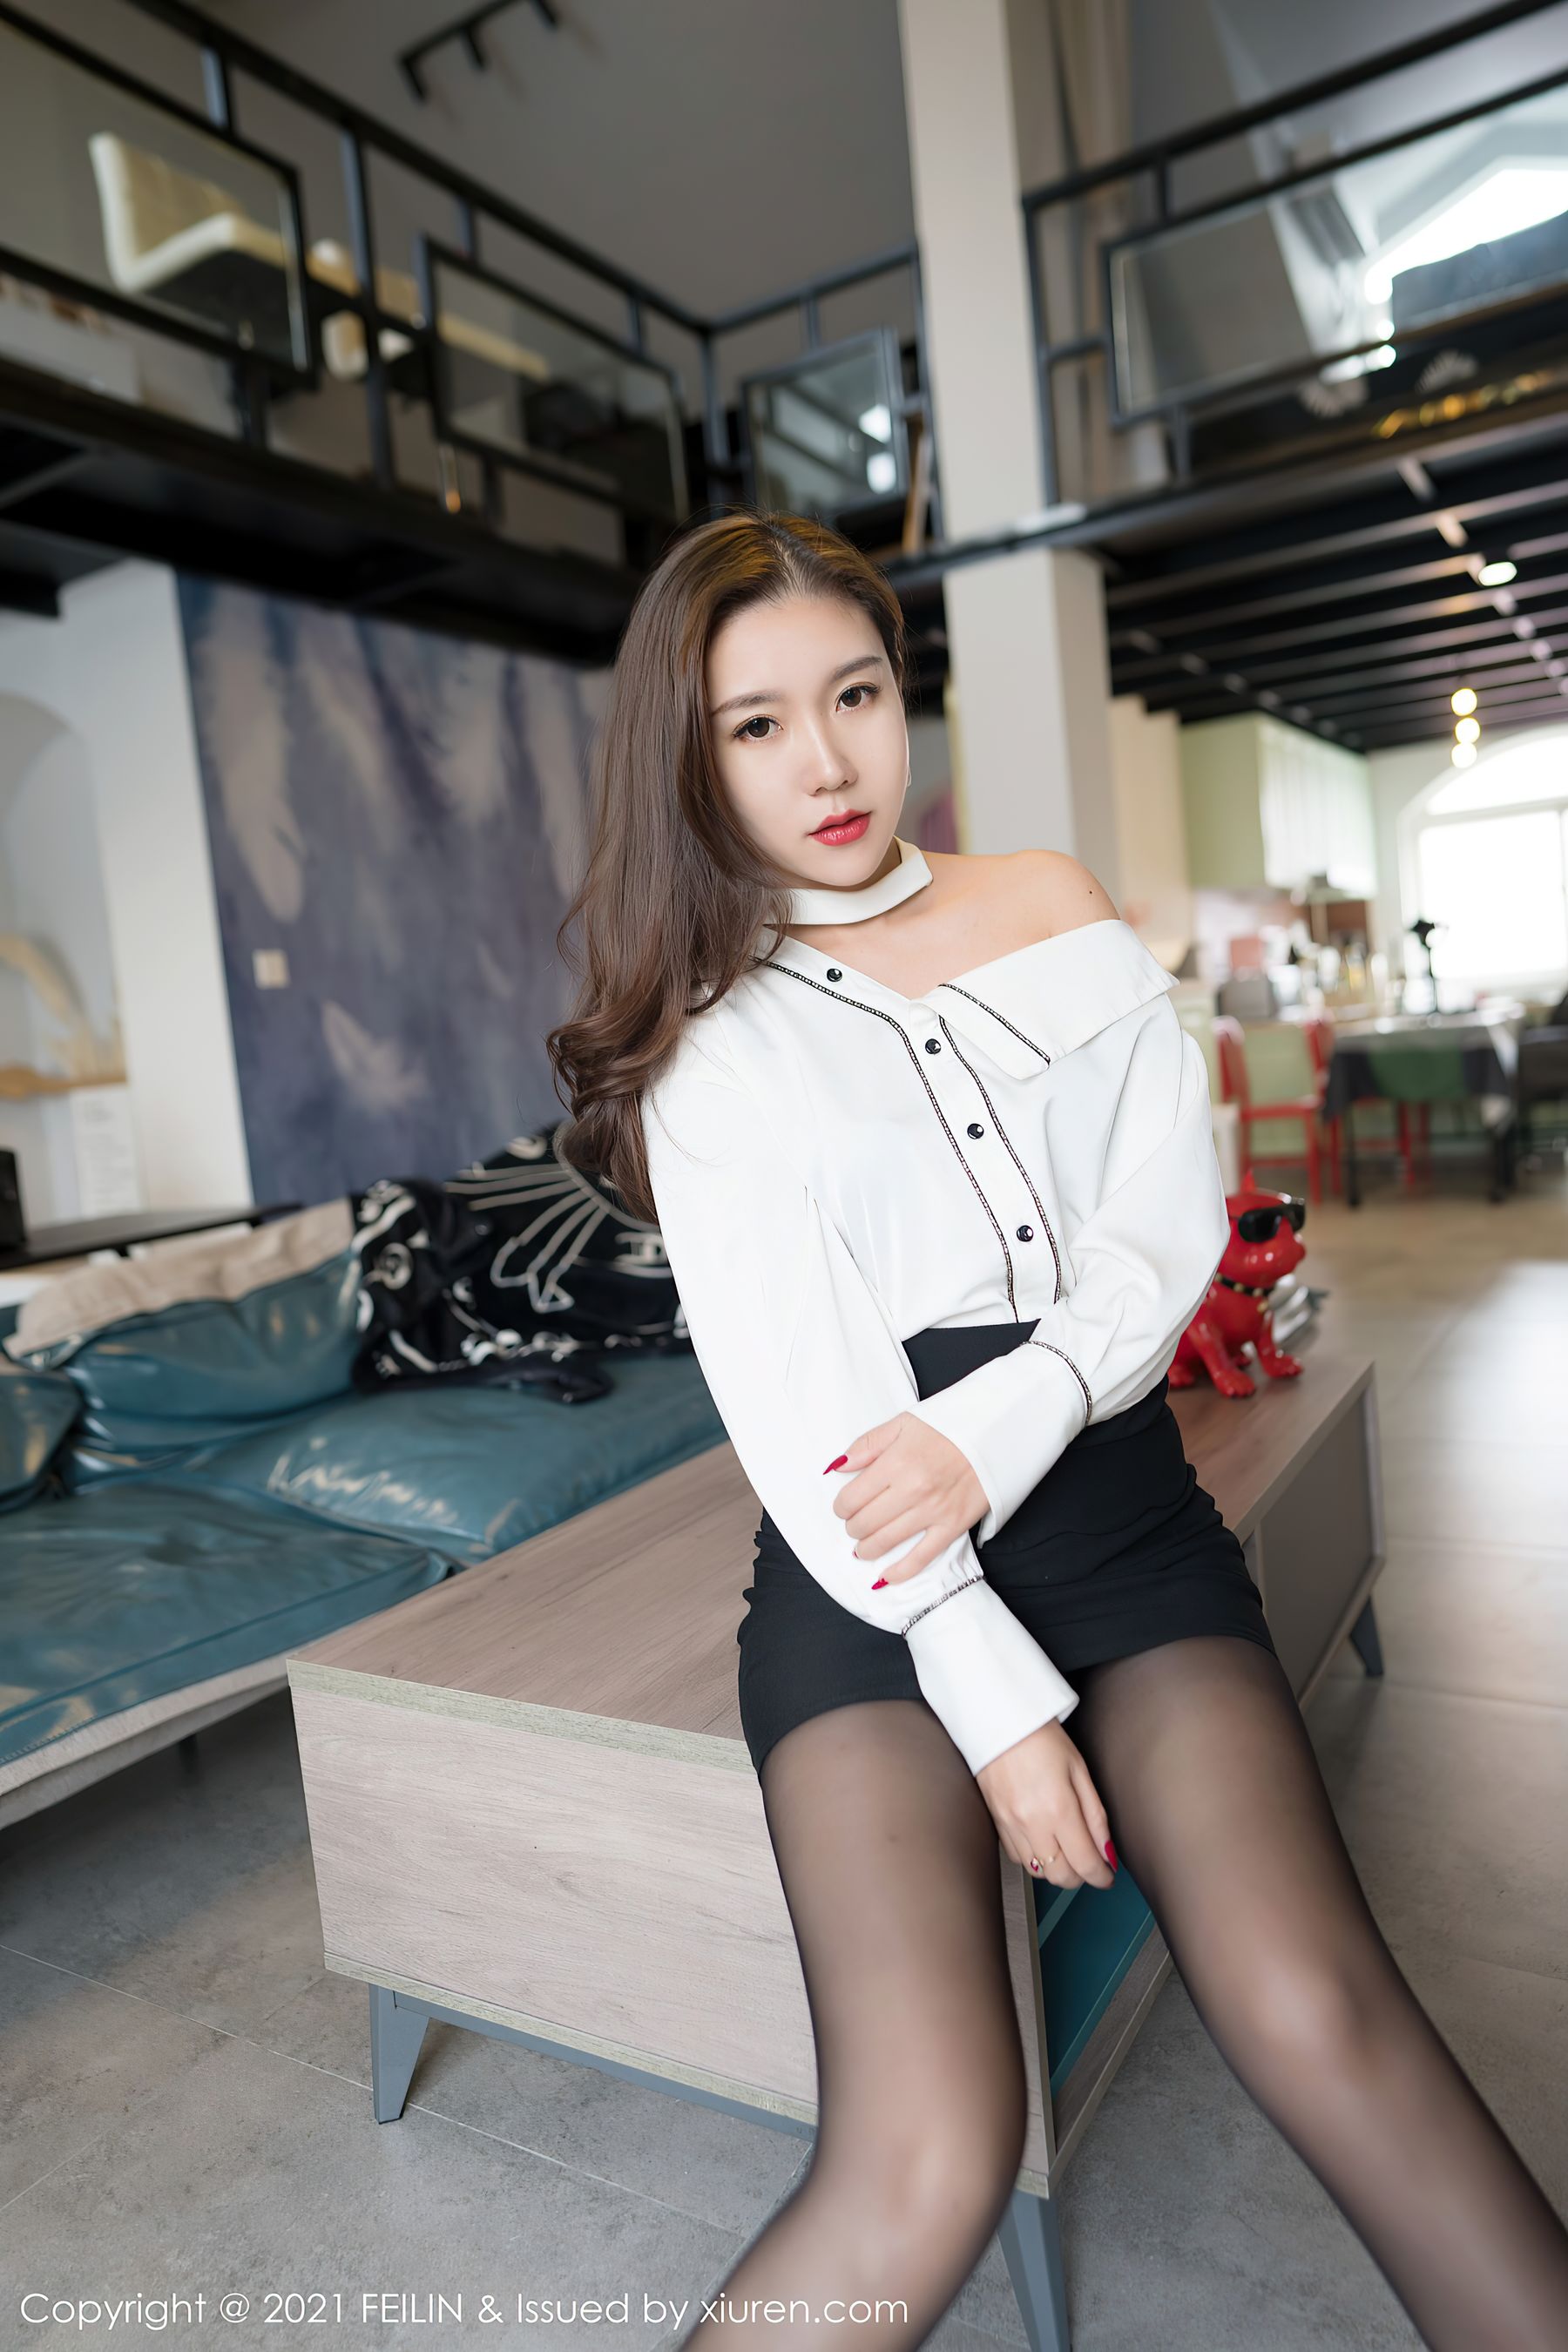 [嗲囡 囡 feilin] Vol.367 静香 – white shirt black short skirt workplace uniform series